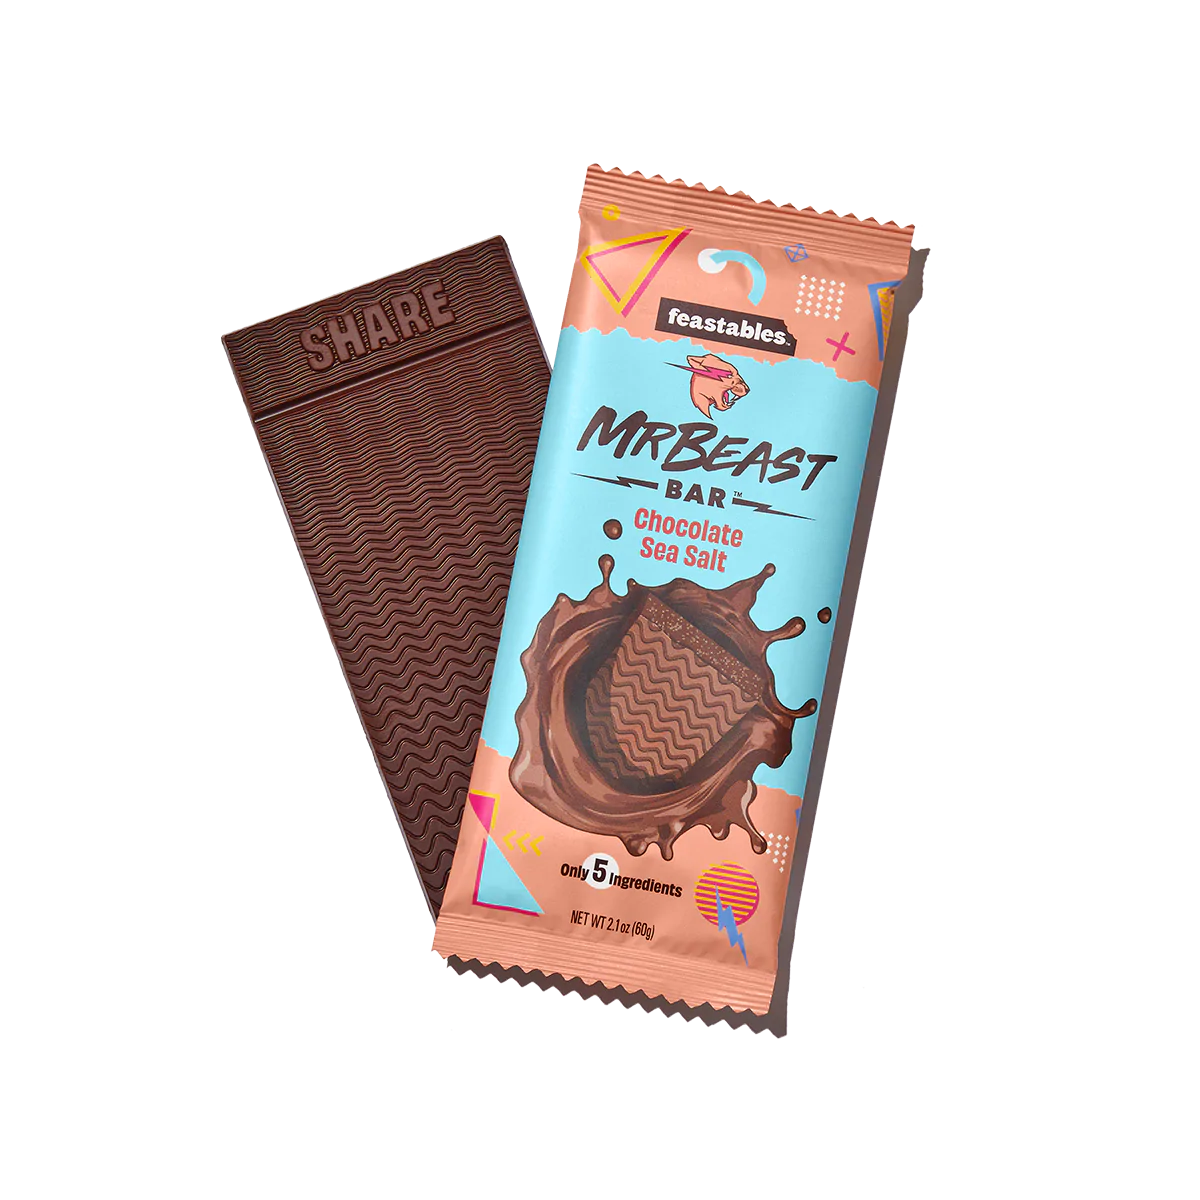 Feastables MrBeast Almond Chocolate Bar 2.1 oz 60g 1 bar 